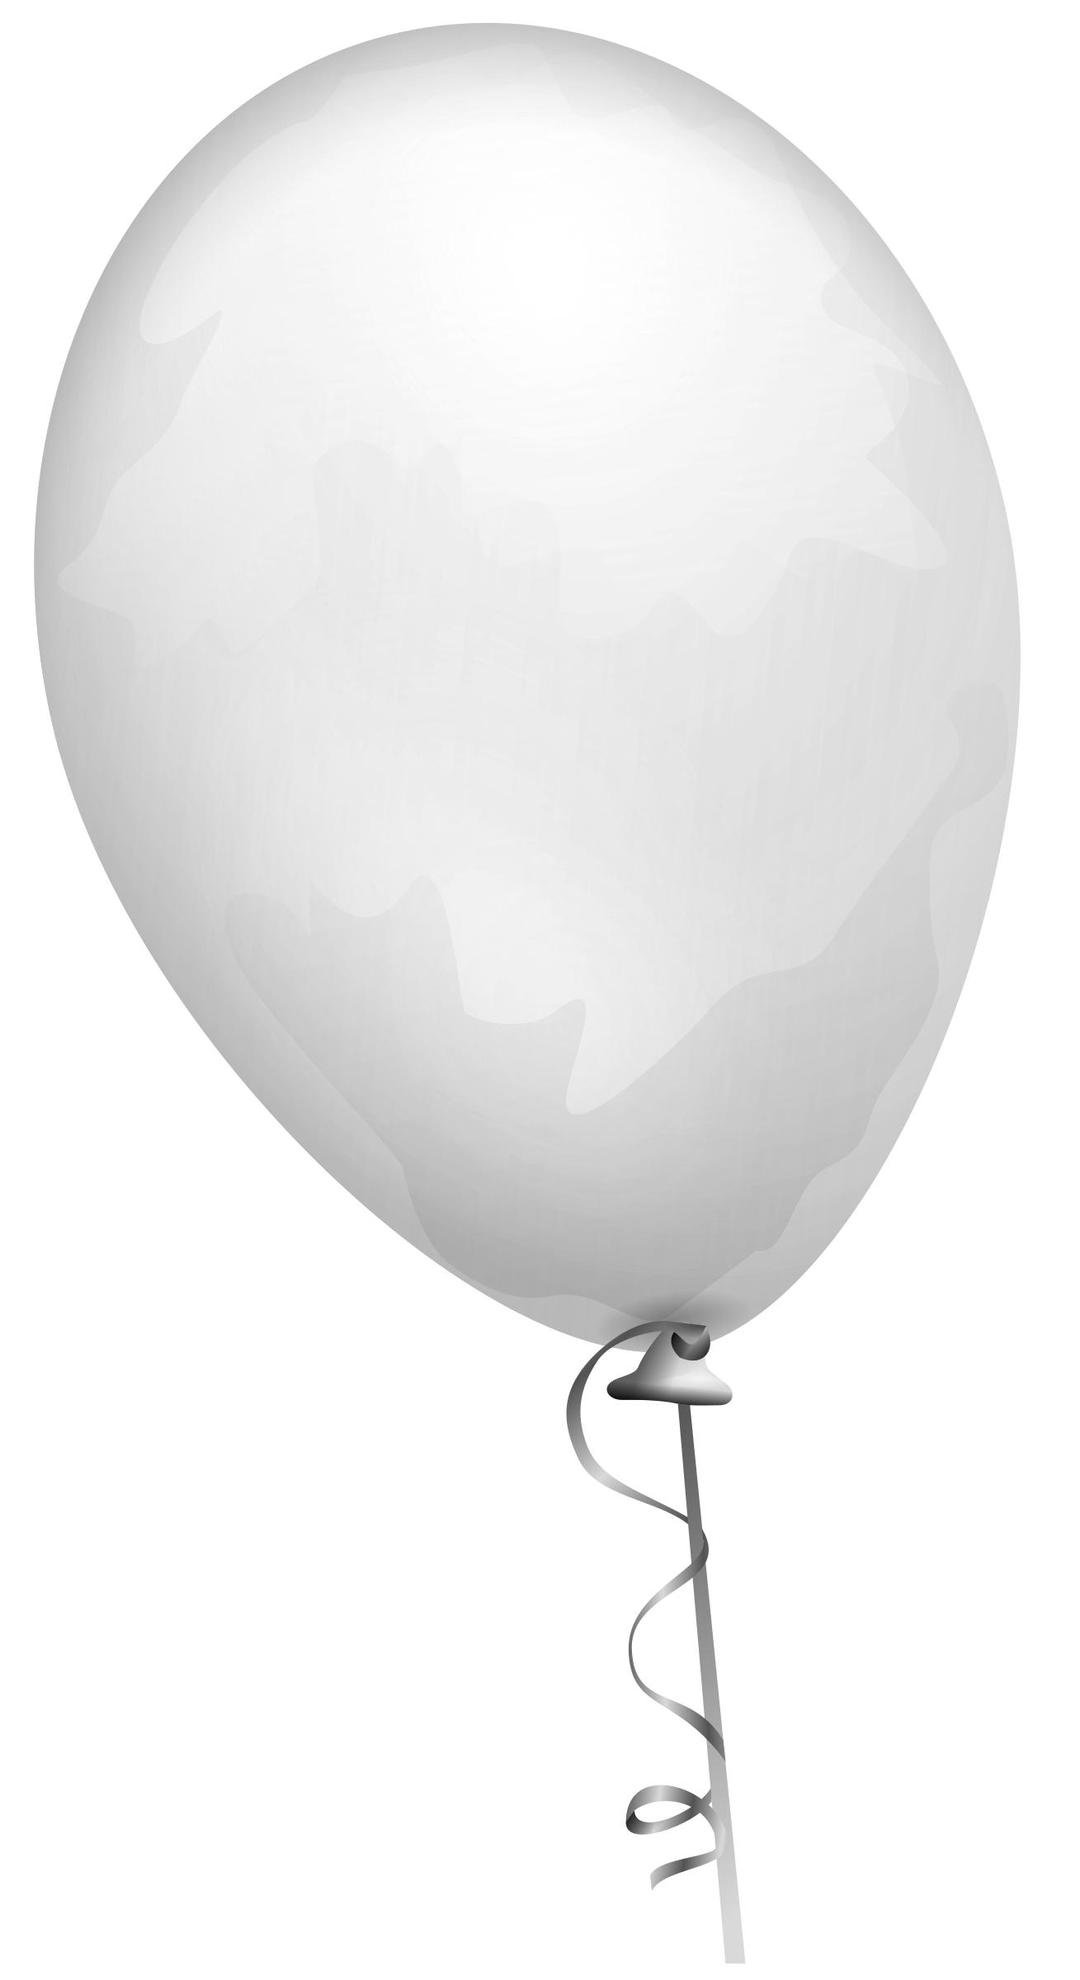 White balloon png transparent